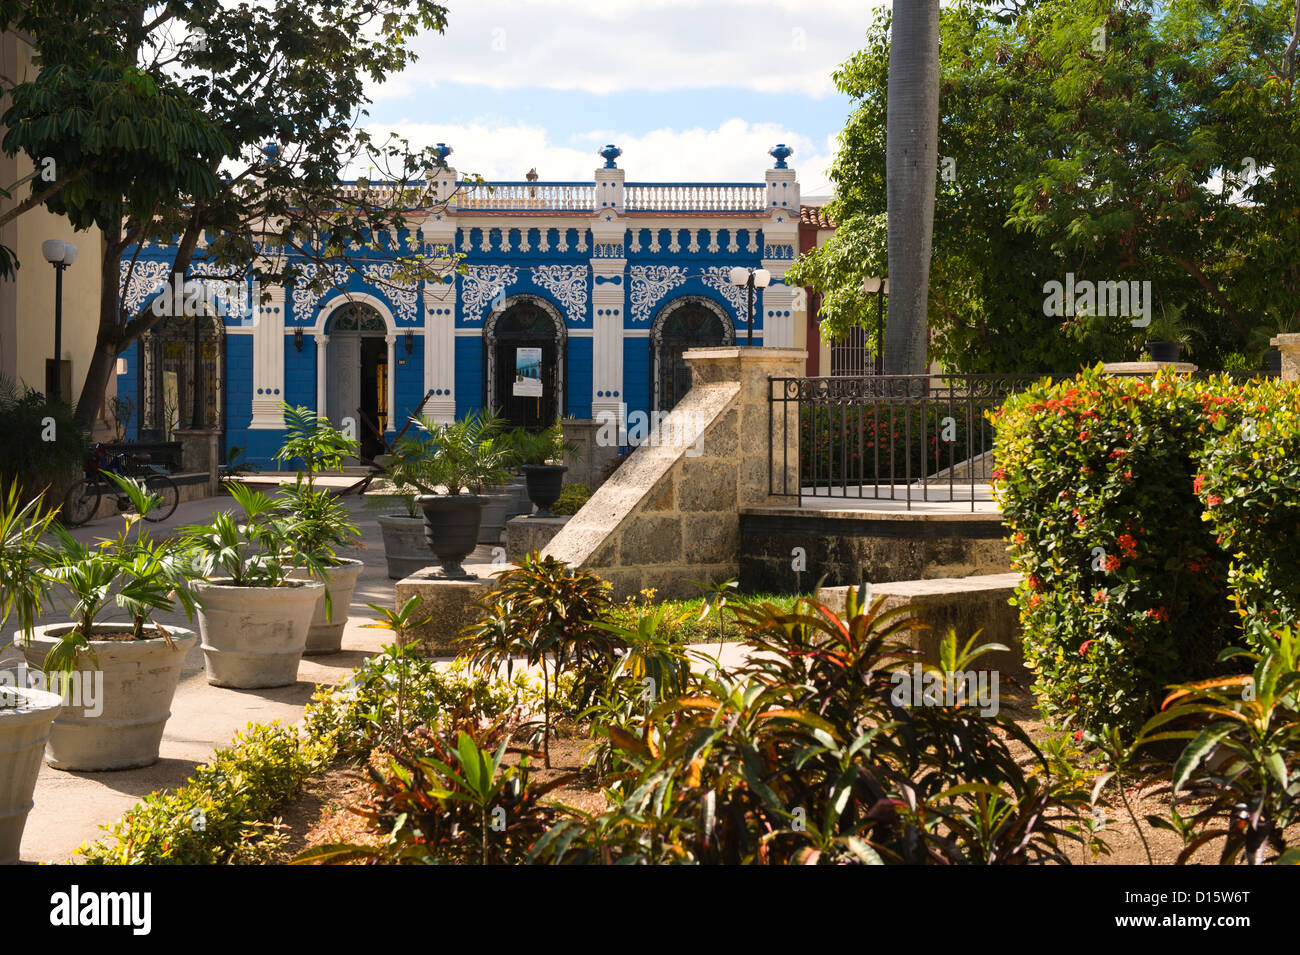 OBRA Abierta, kulturelle Zentrum für Anthropologie, Camagüey, Kuba Stockfoto